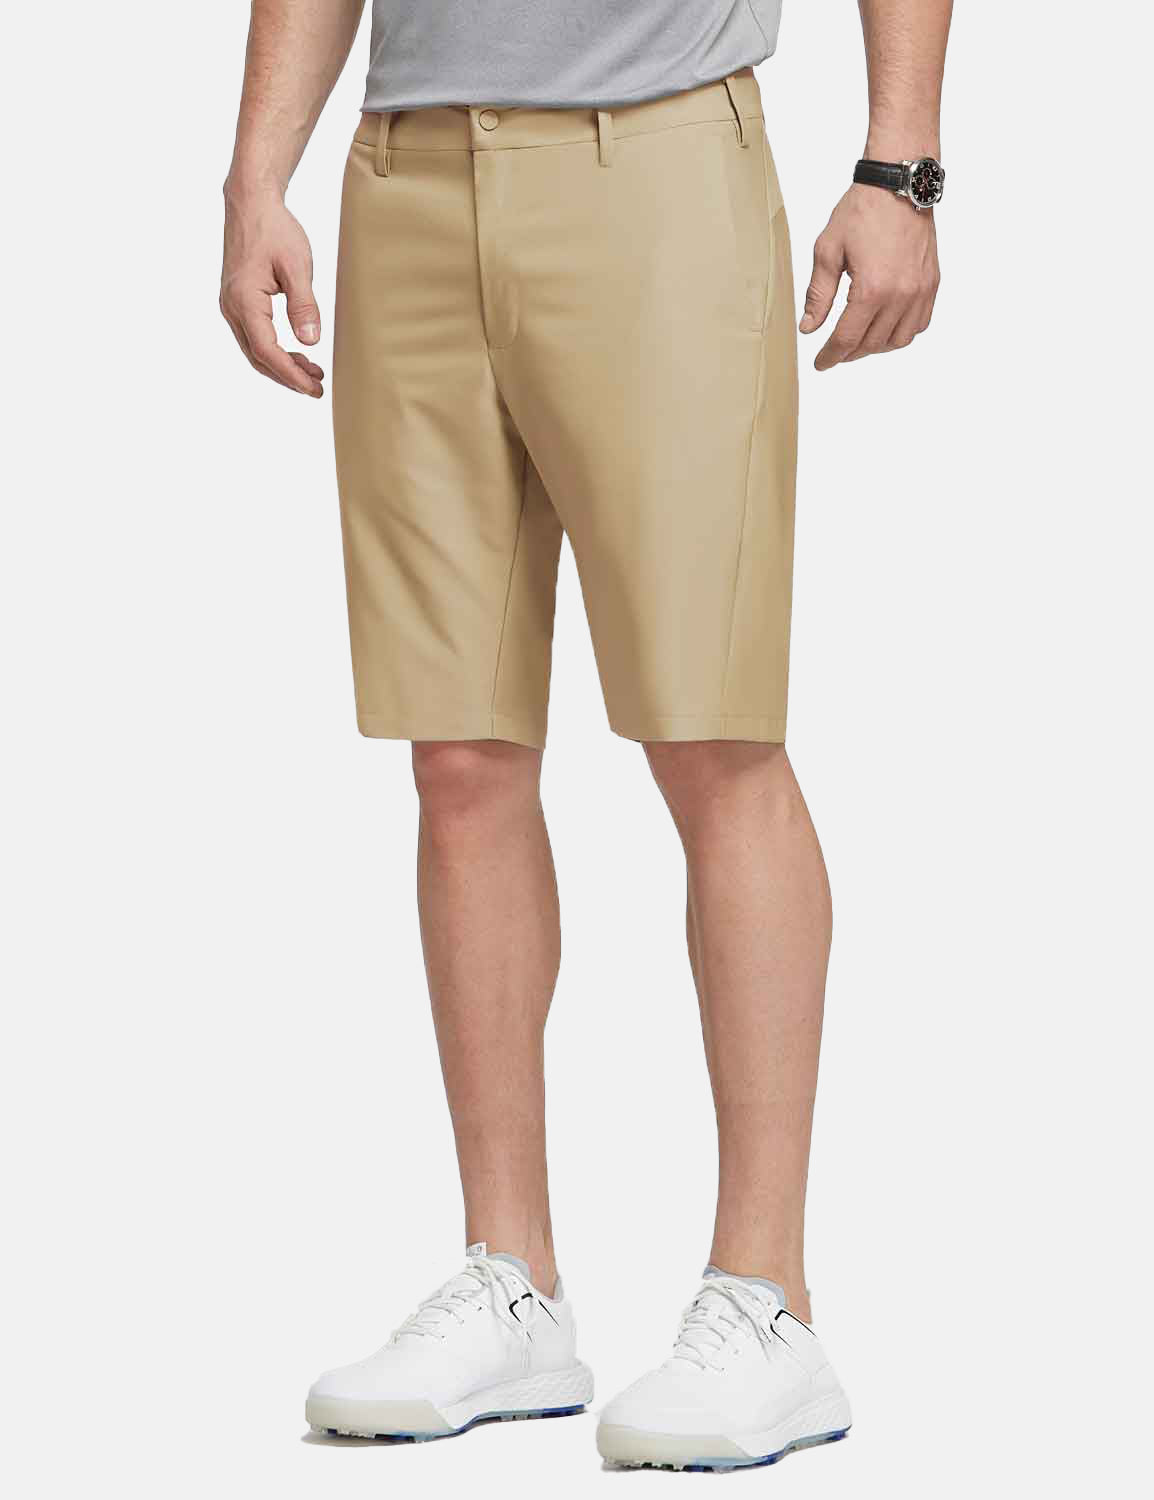 Baleaf Men's 10' UPF 50+ Lightweight Golf Shorts w Zipper Pockets cga005 Khaki Side